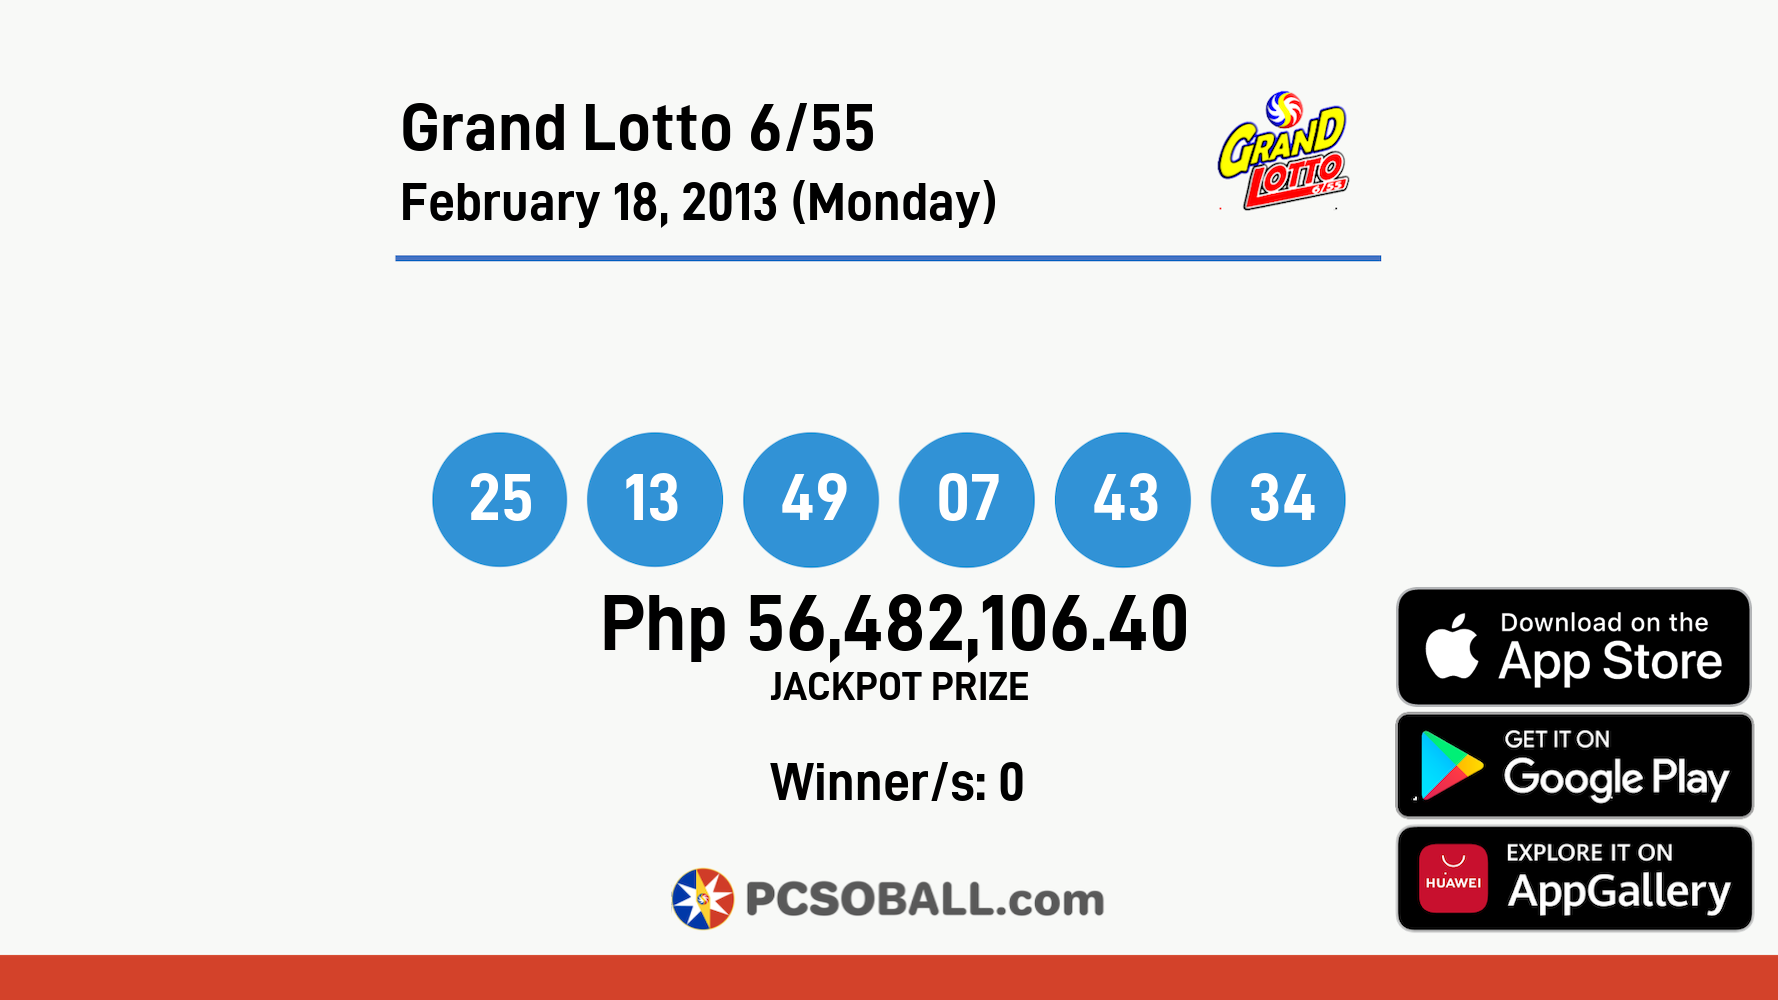 Grand Lotto 6/55 February 18, 2013 (Monday) Result